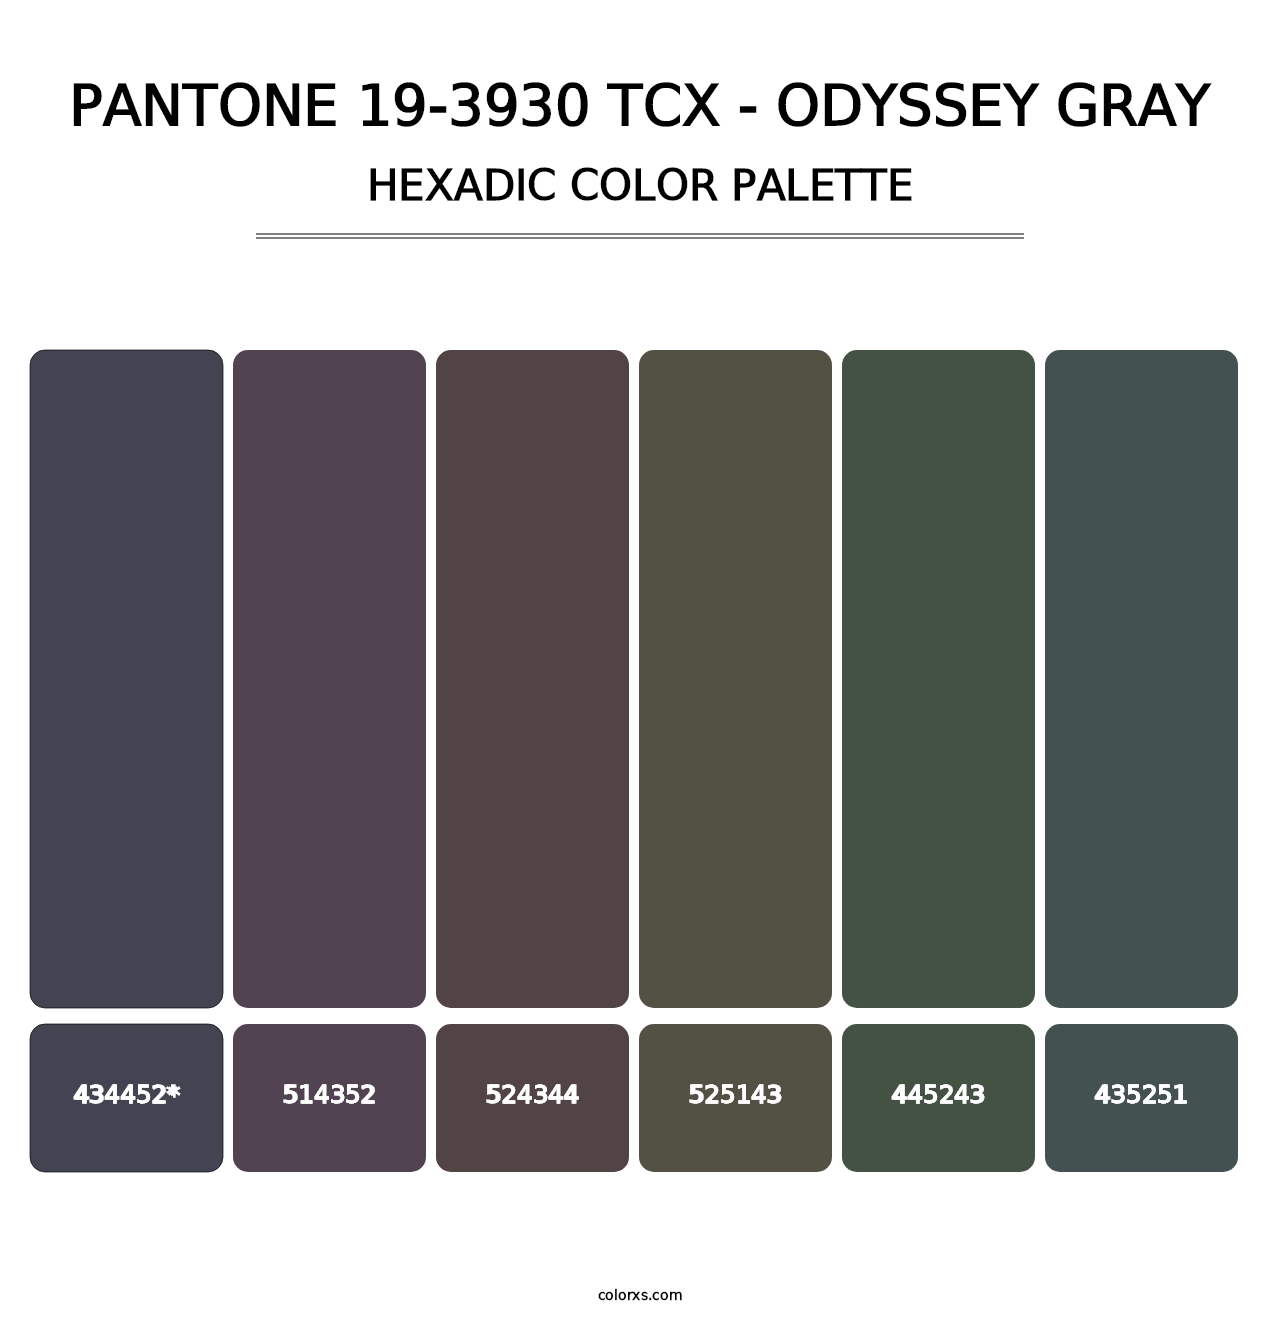 PANTONE 19-3930 TCX - Odyssey Gray - Hexadic Color Palette